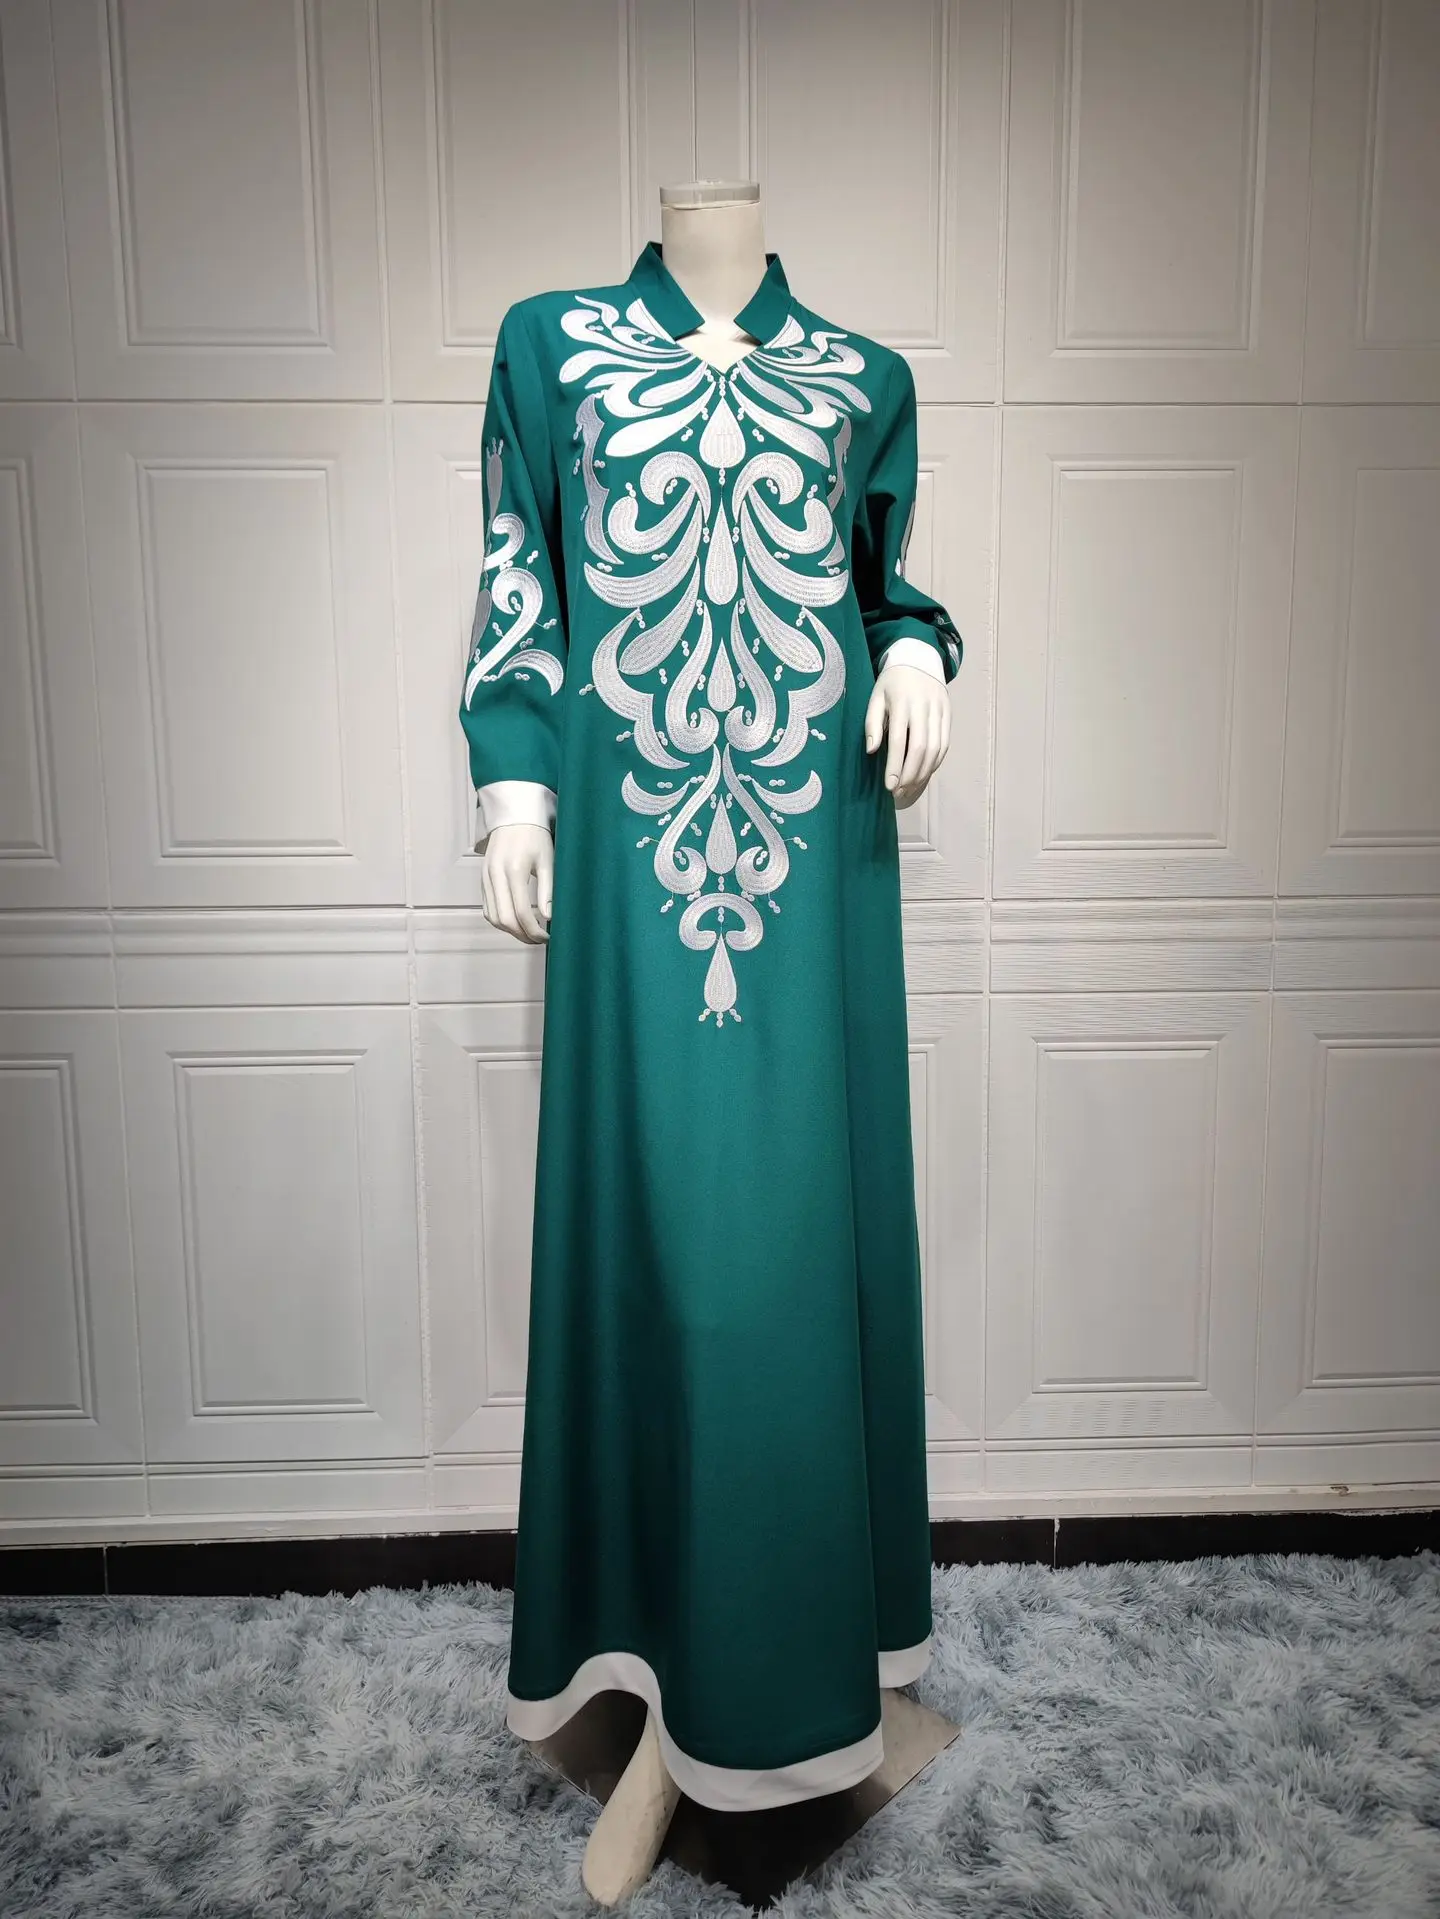 Robe Muslim Abaya Dubai Embroidered Kebaya Dress Long Sleeve Gowns Moroccan Kaftan Islam Oman Ladies Dresses